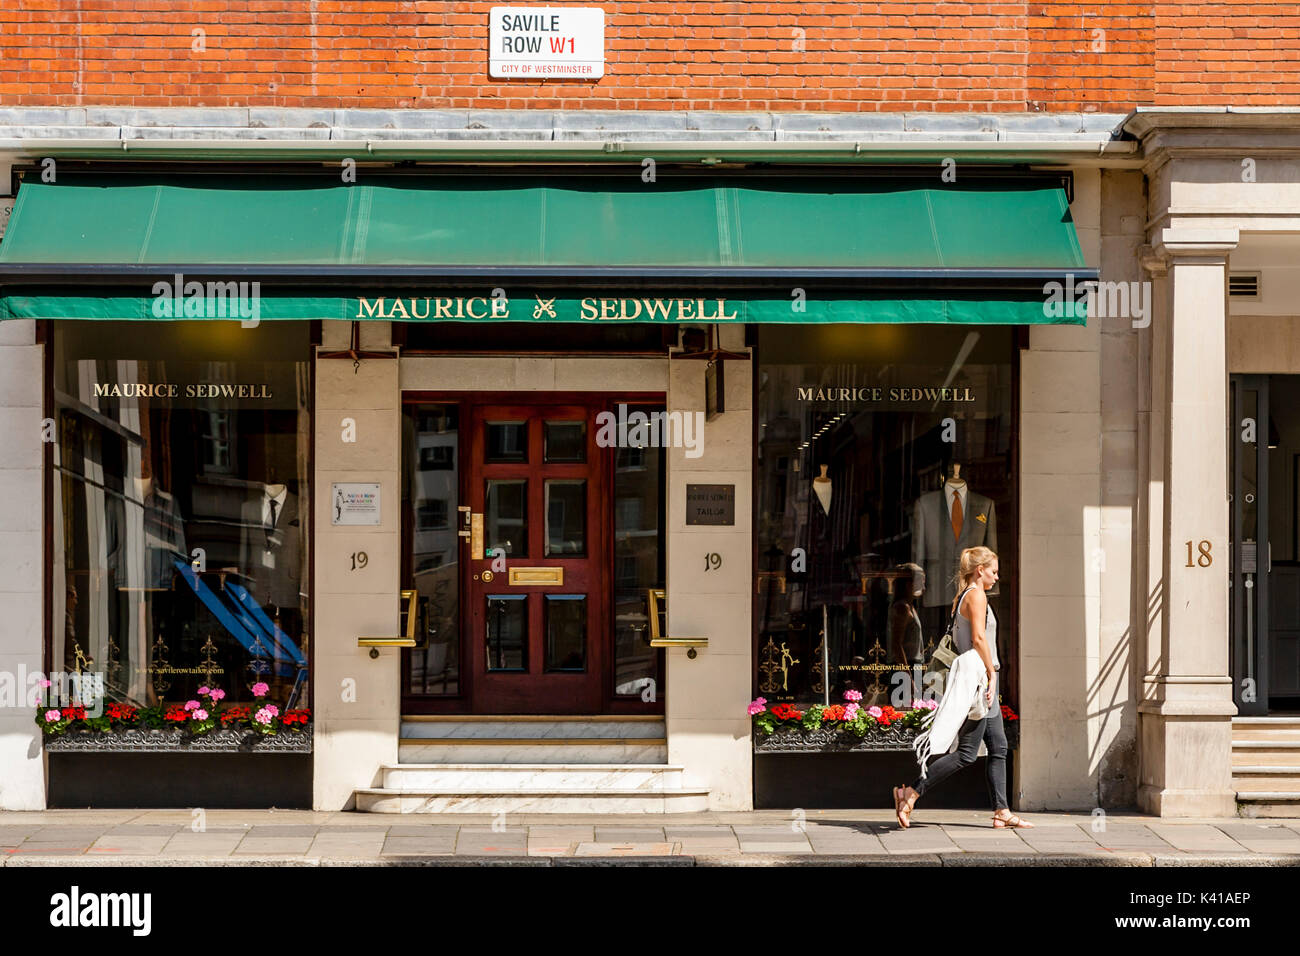 Maurice Sedwell tailleurs sur mesure, Savile Row, London, UK Banque D'Images